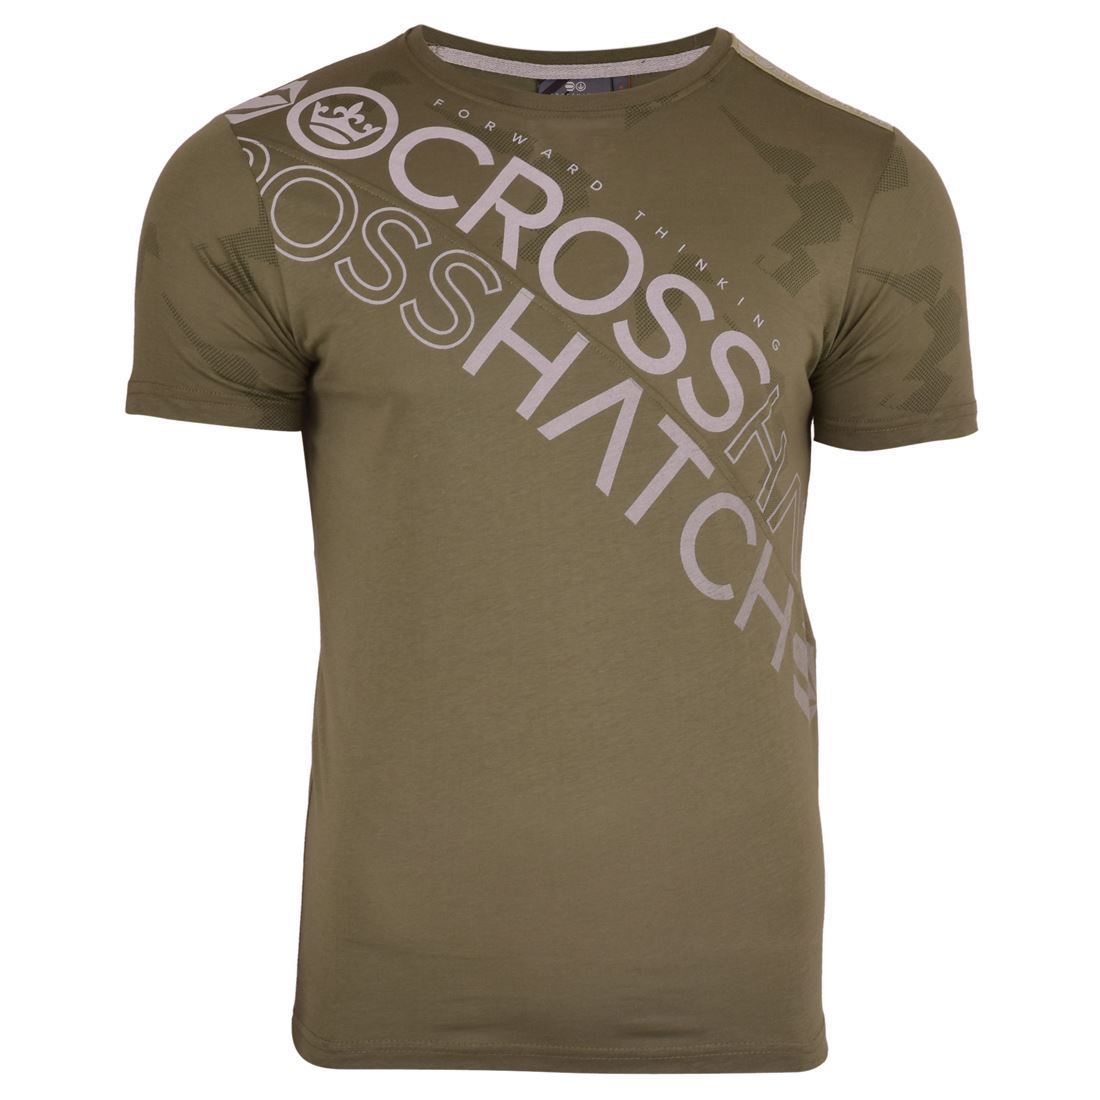 Crosshatch Men's Short Sleeved Crew Neck T Shirt Graphic Large Logo Cotton Tee